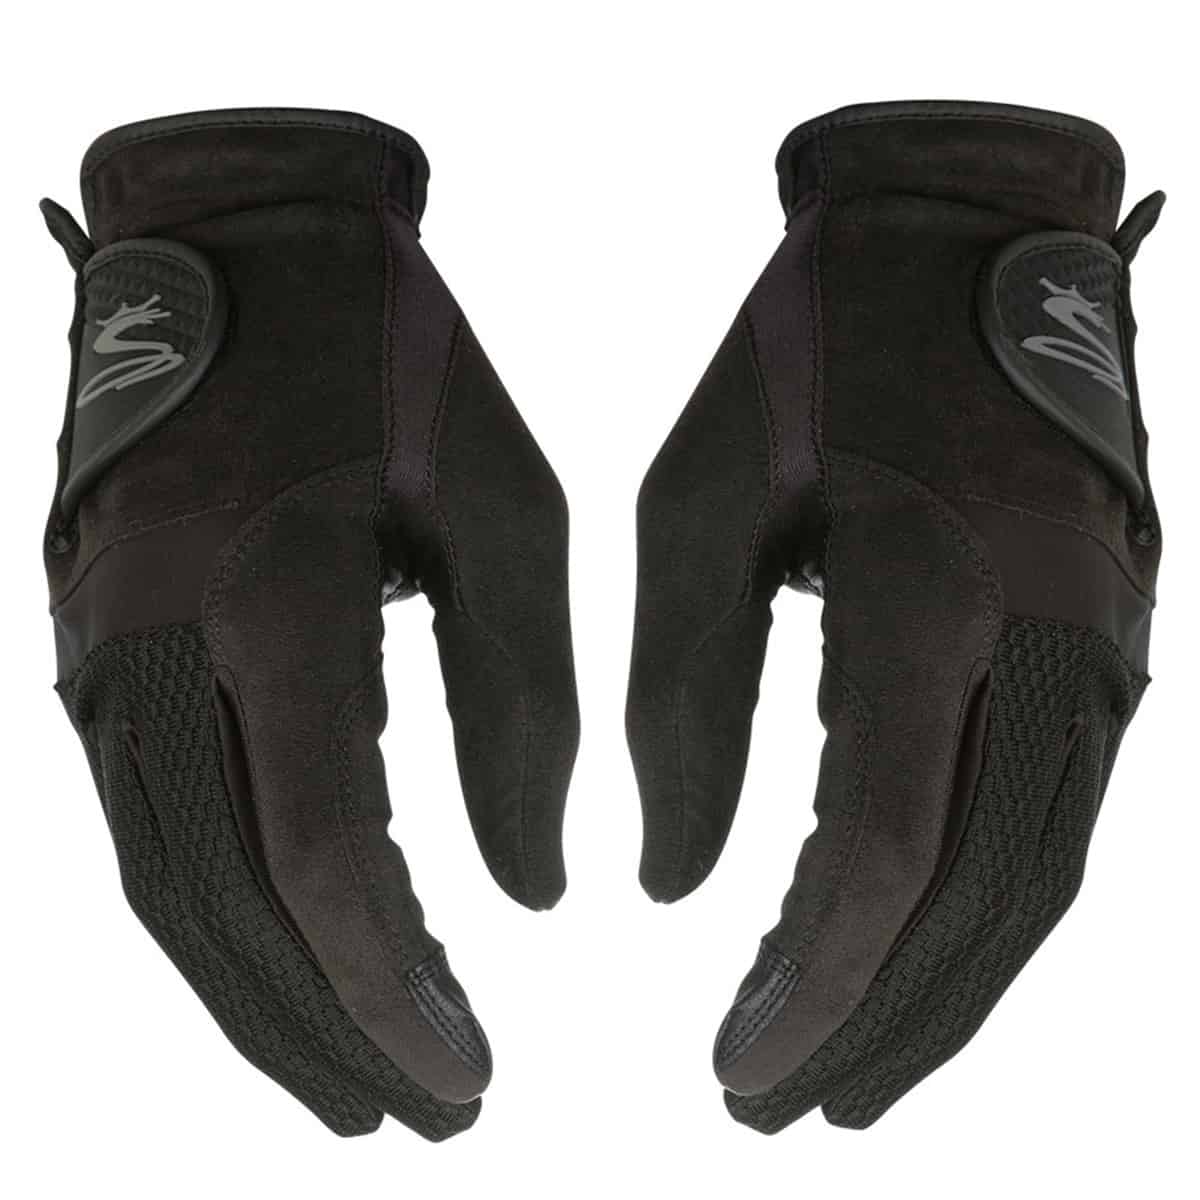 Cobra Stormgrip Rain Golf Gloves